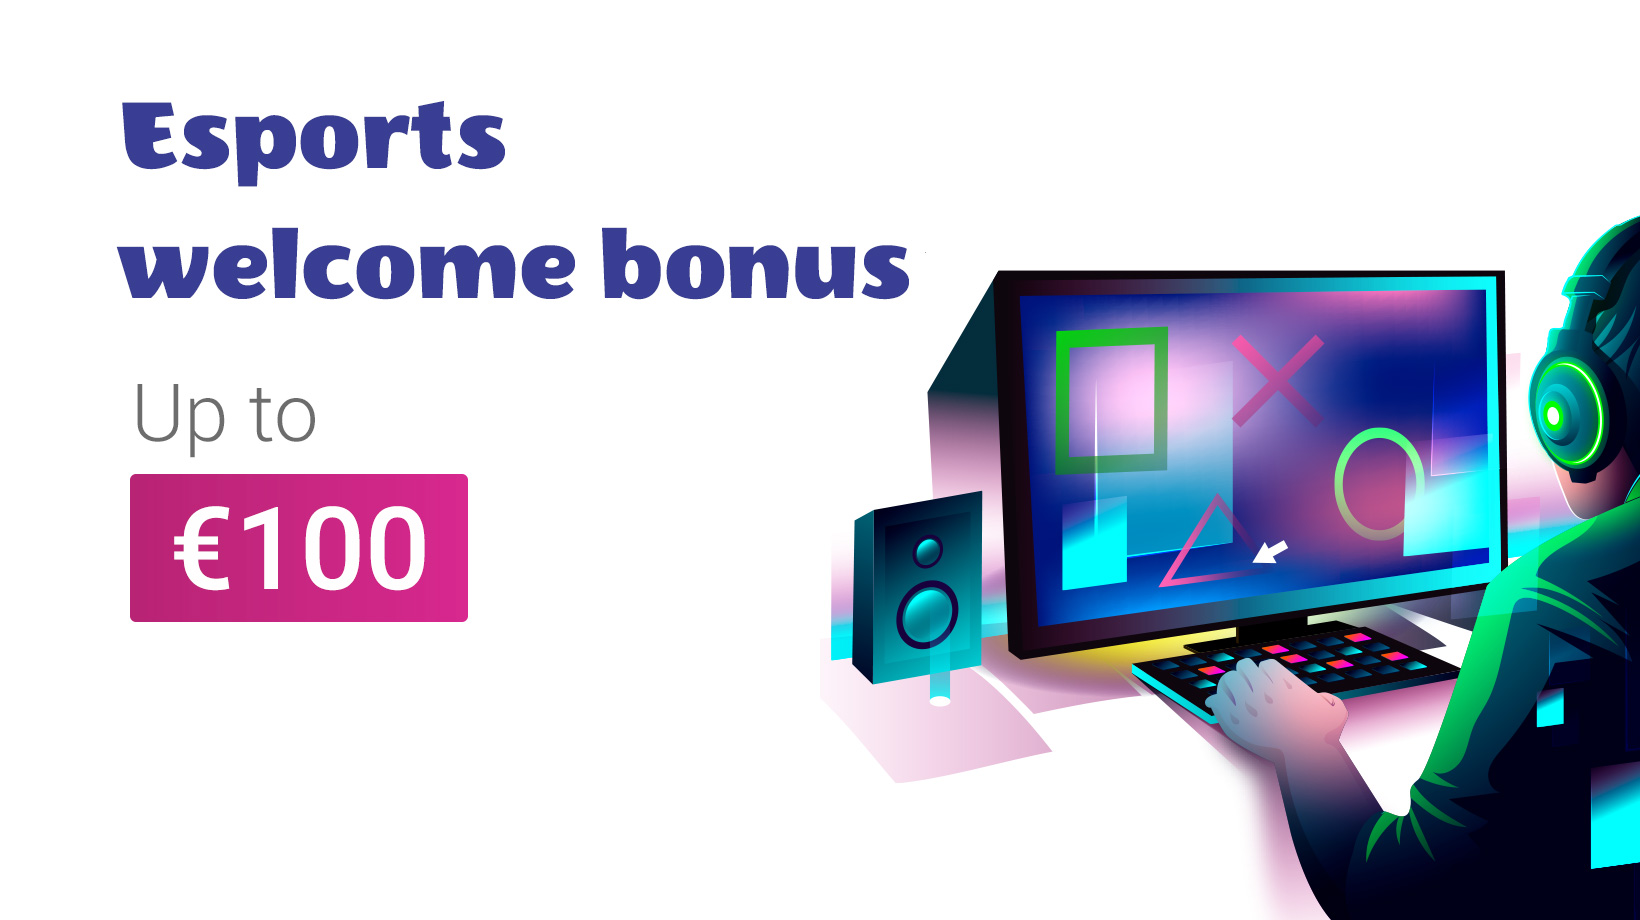 Esports welcome bonus Up to €100